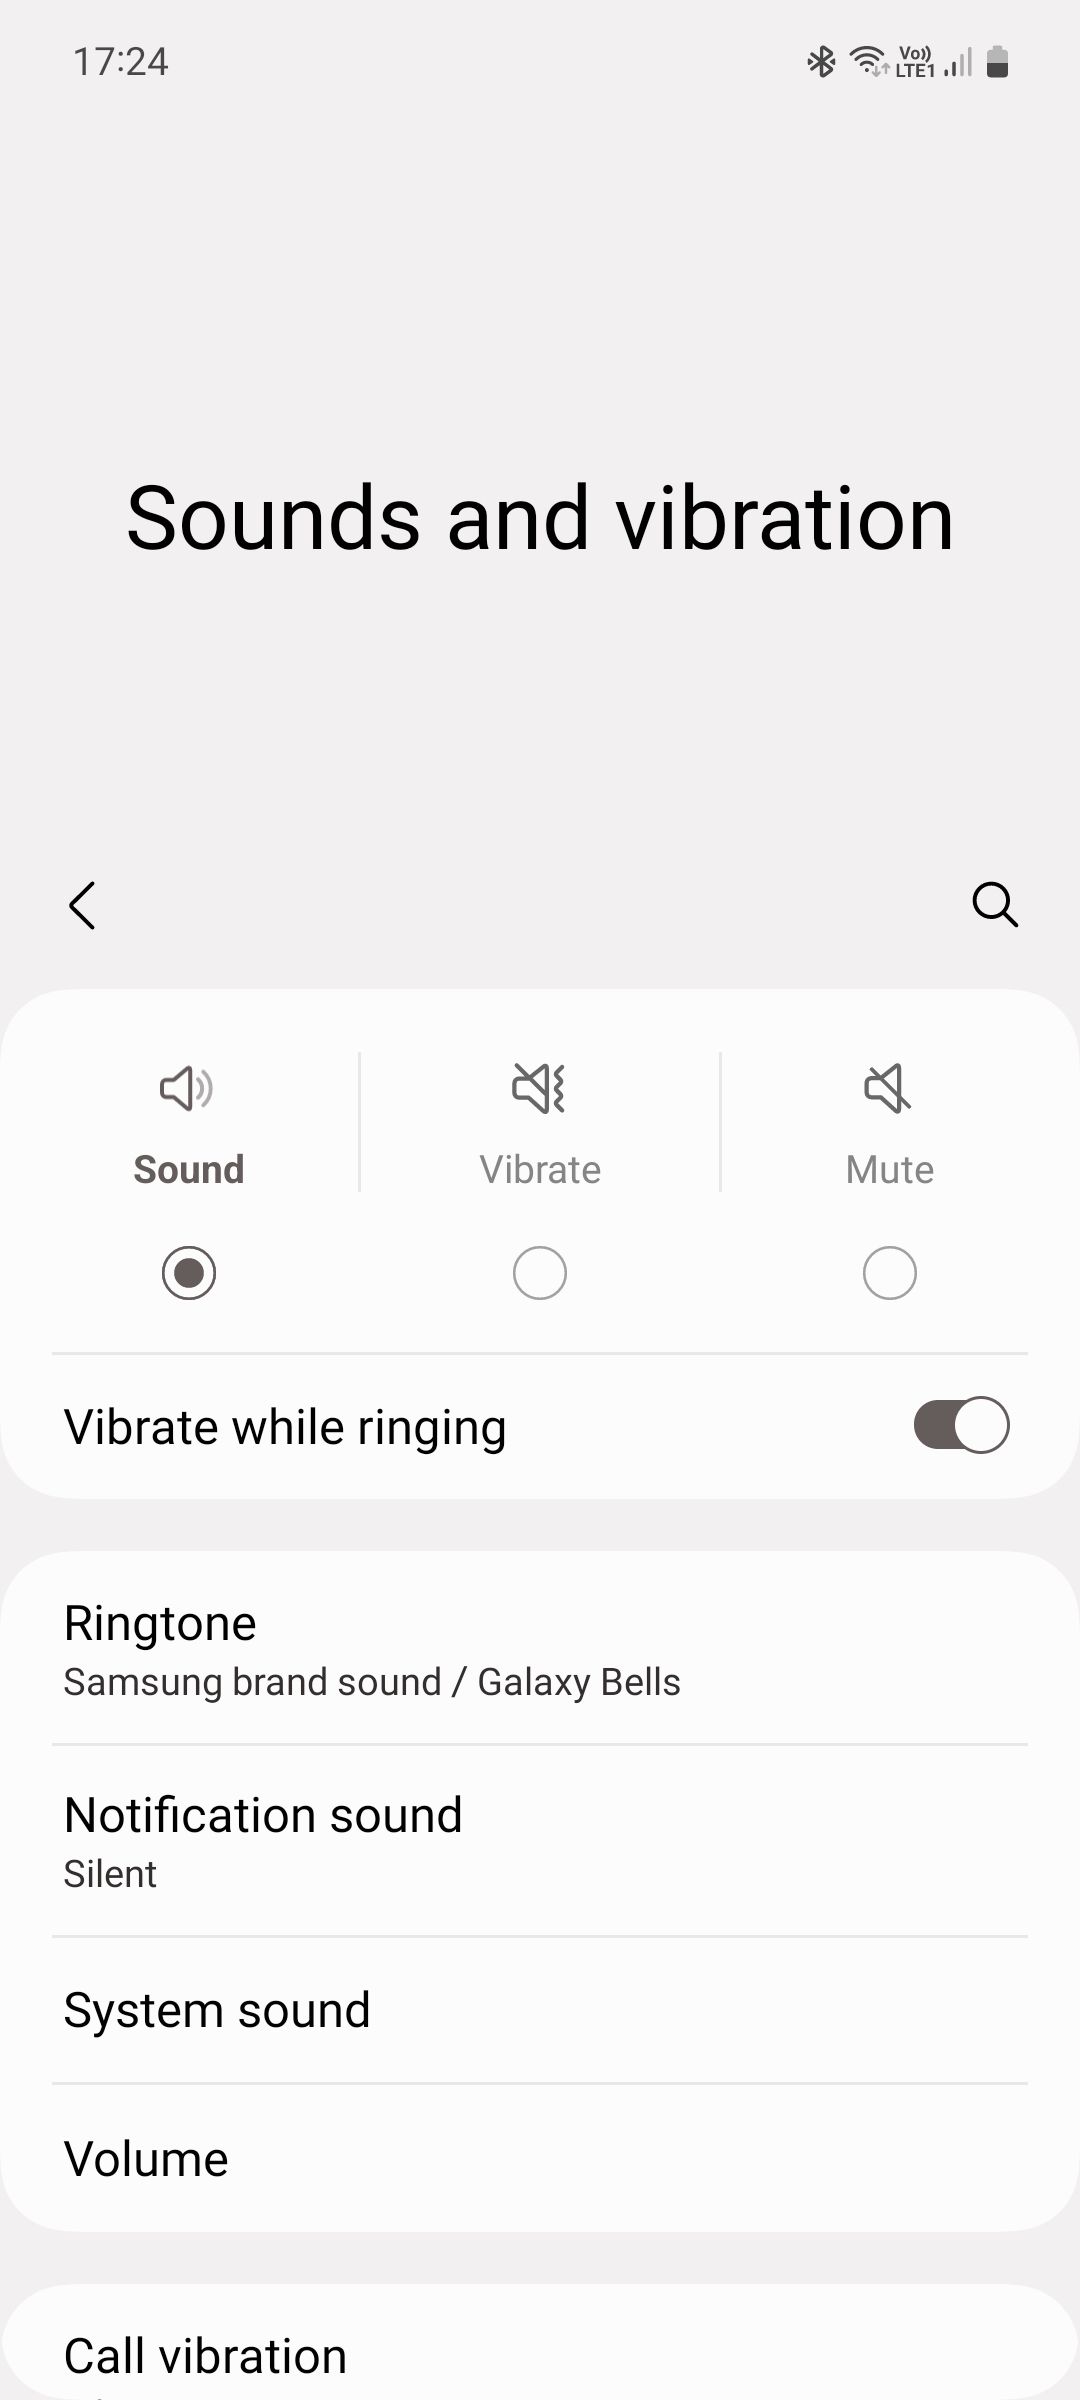 Samsung One UI Sounds and vibration menu